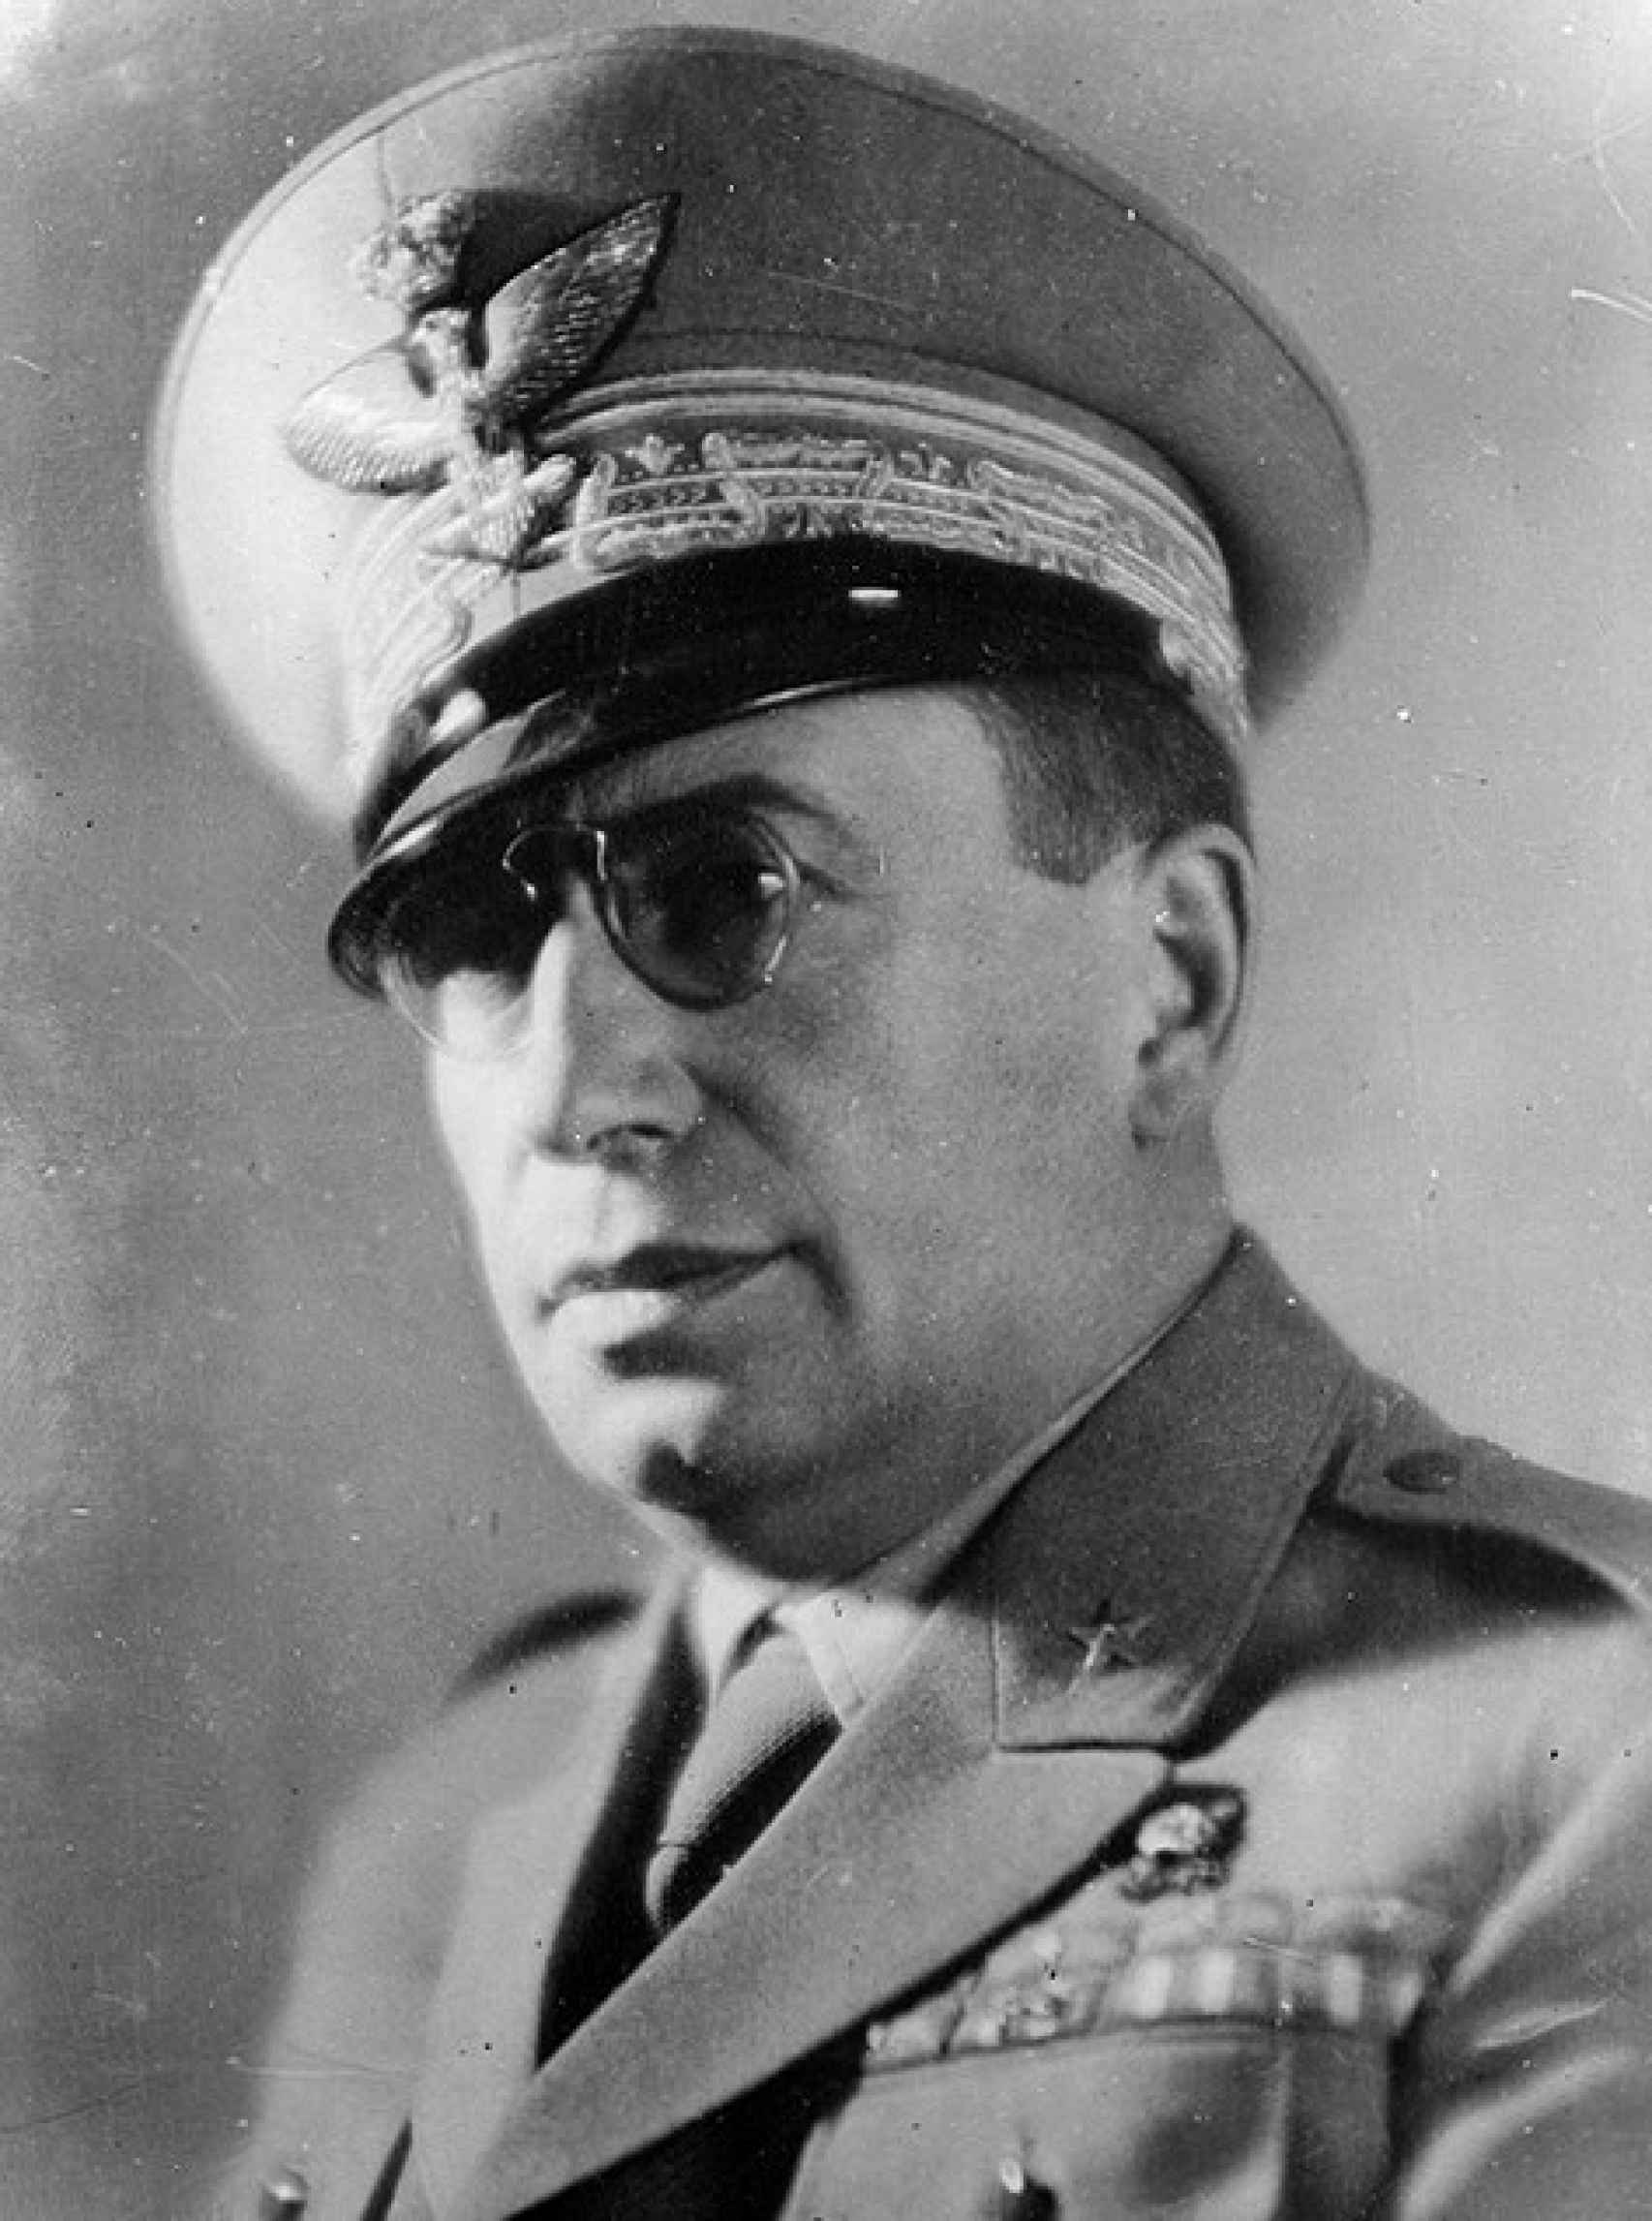 El teniente coronel de la Italia fascista Mario Roatta.